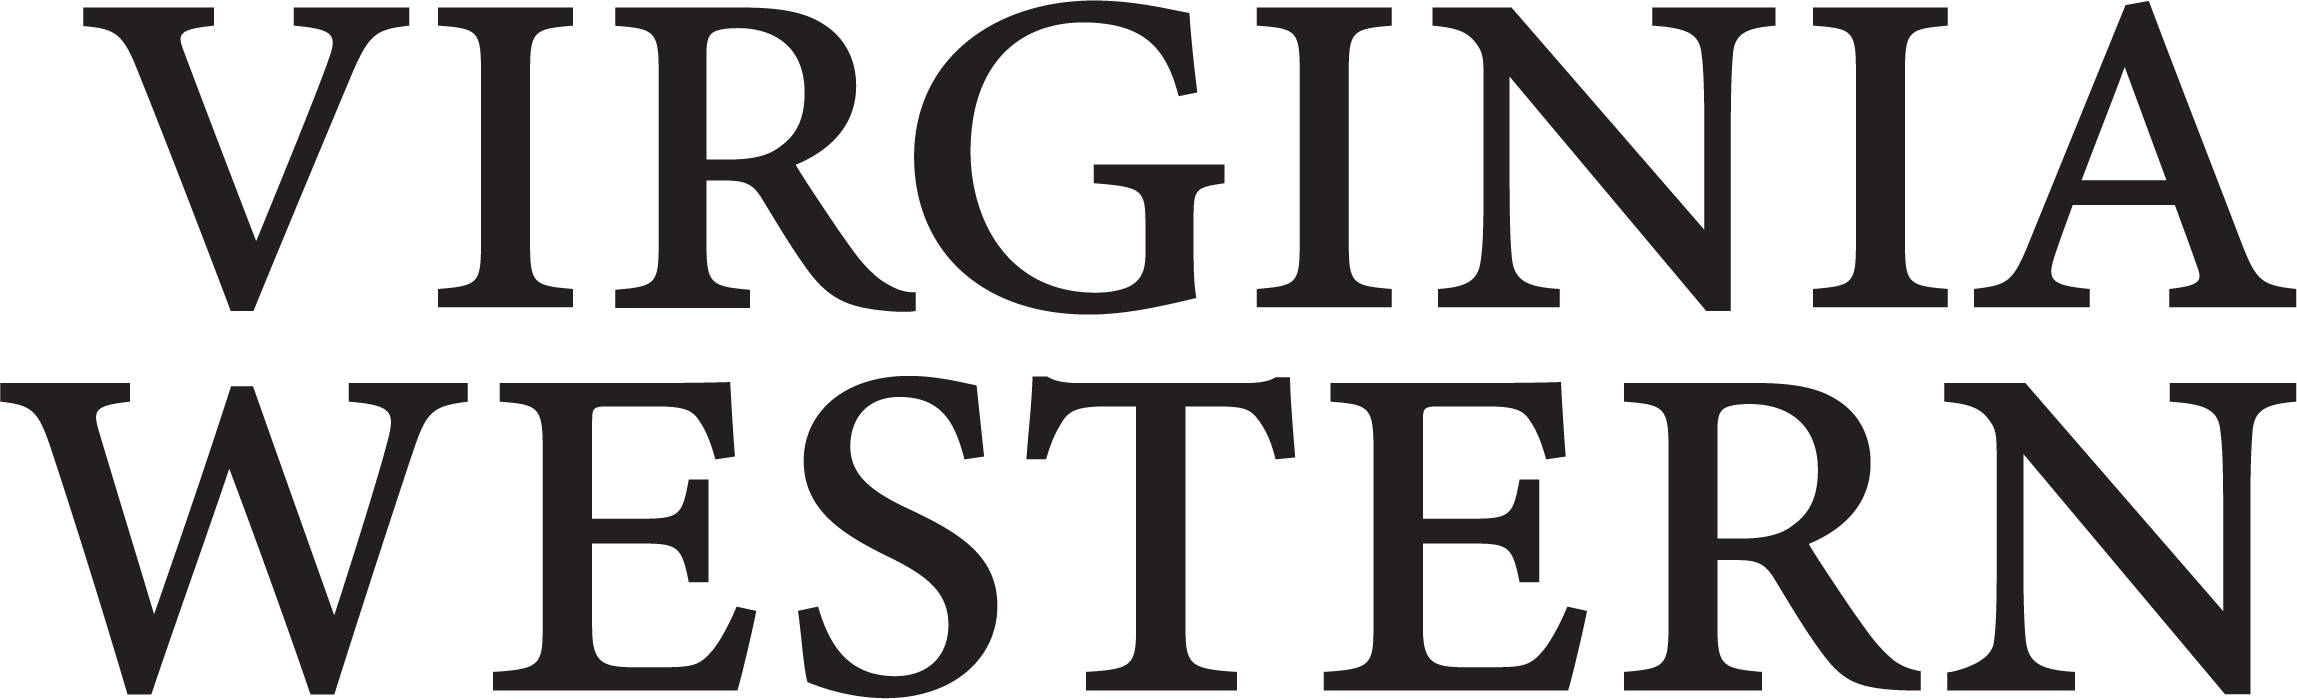 Virginia Western Logo Black